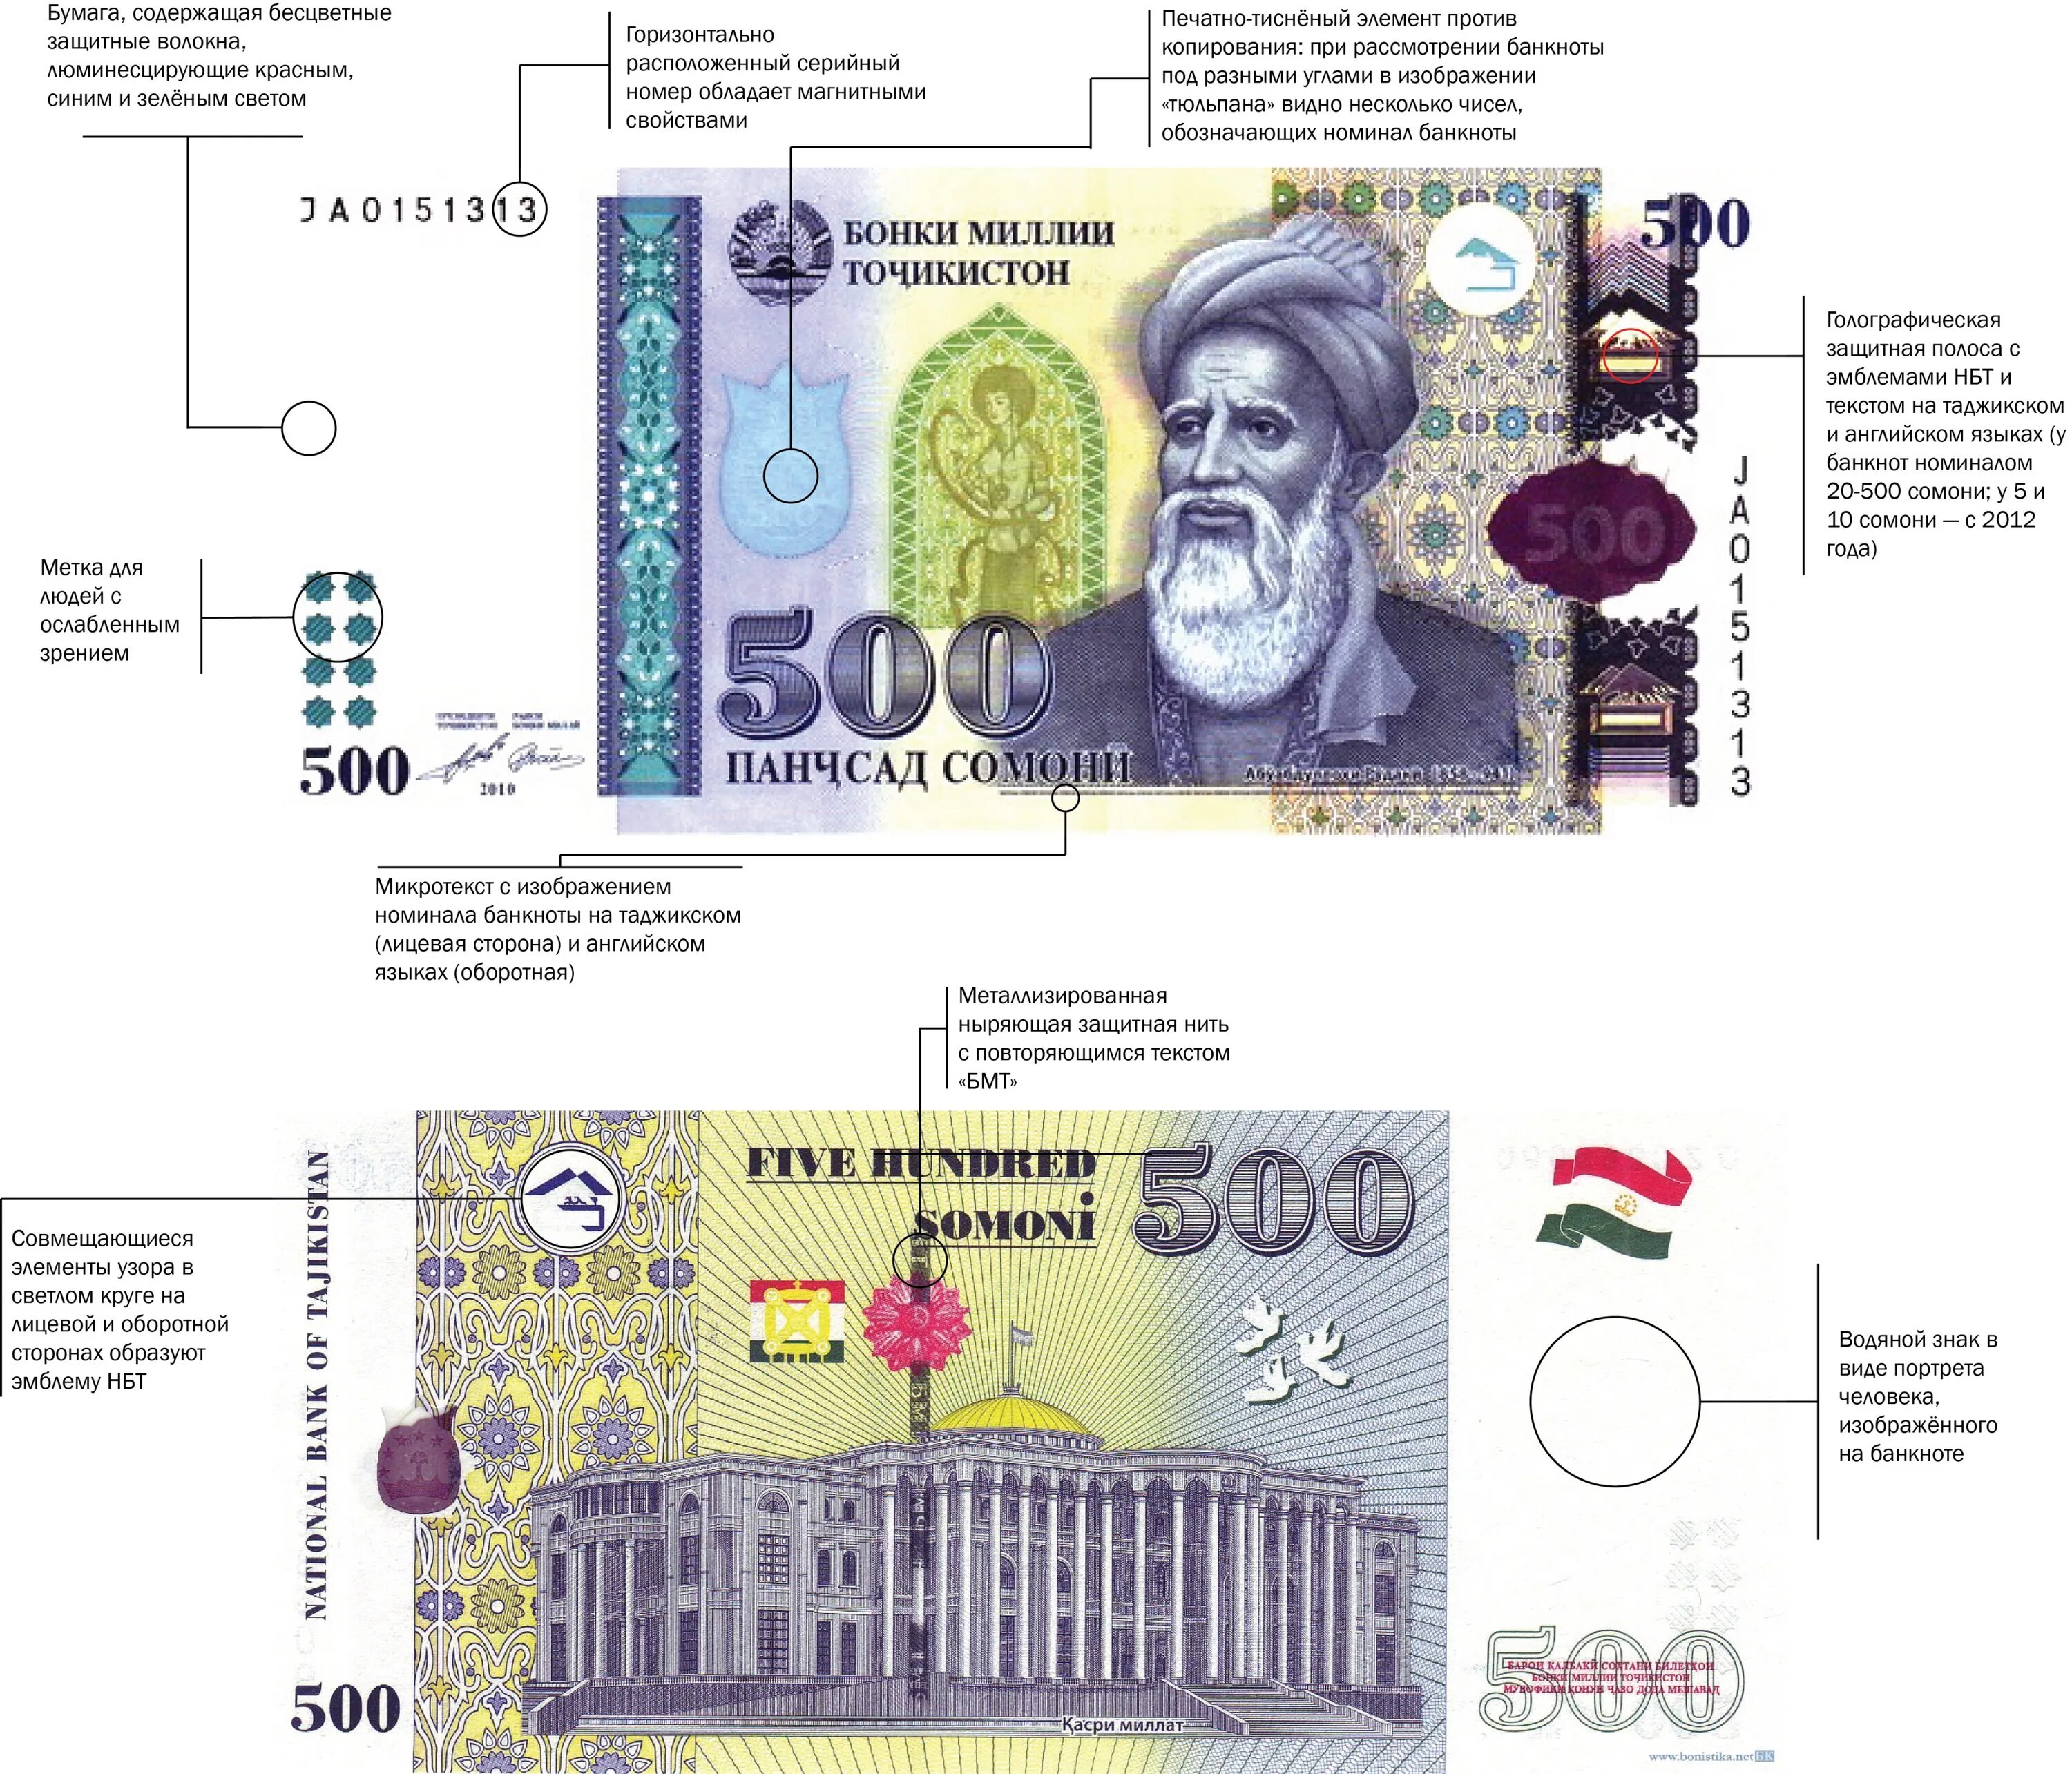 500 сомони в рублях на сегодня. 1000 Сомони купюра картина. Валюта Таджикистана 1000 Сомони. Банкноты Сомони Таджикистана. Купюра Таджикистанский Сомони.